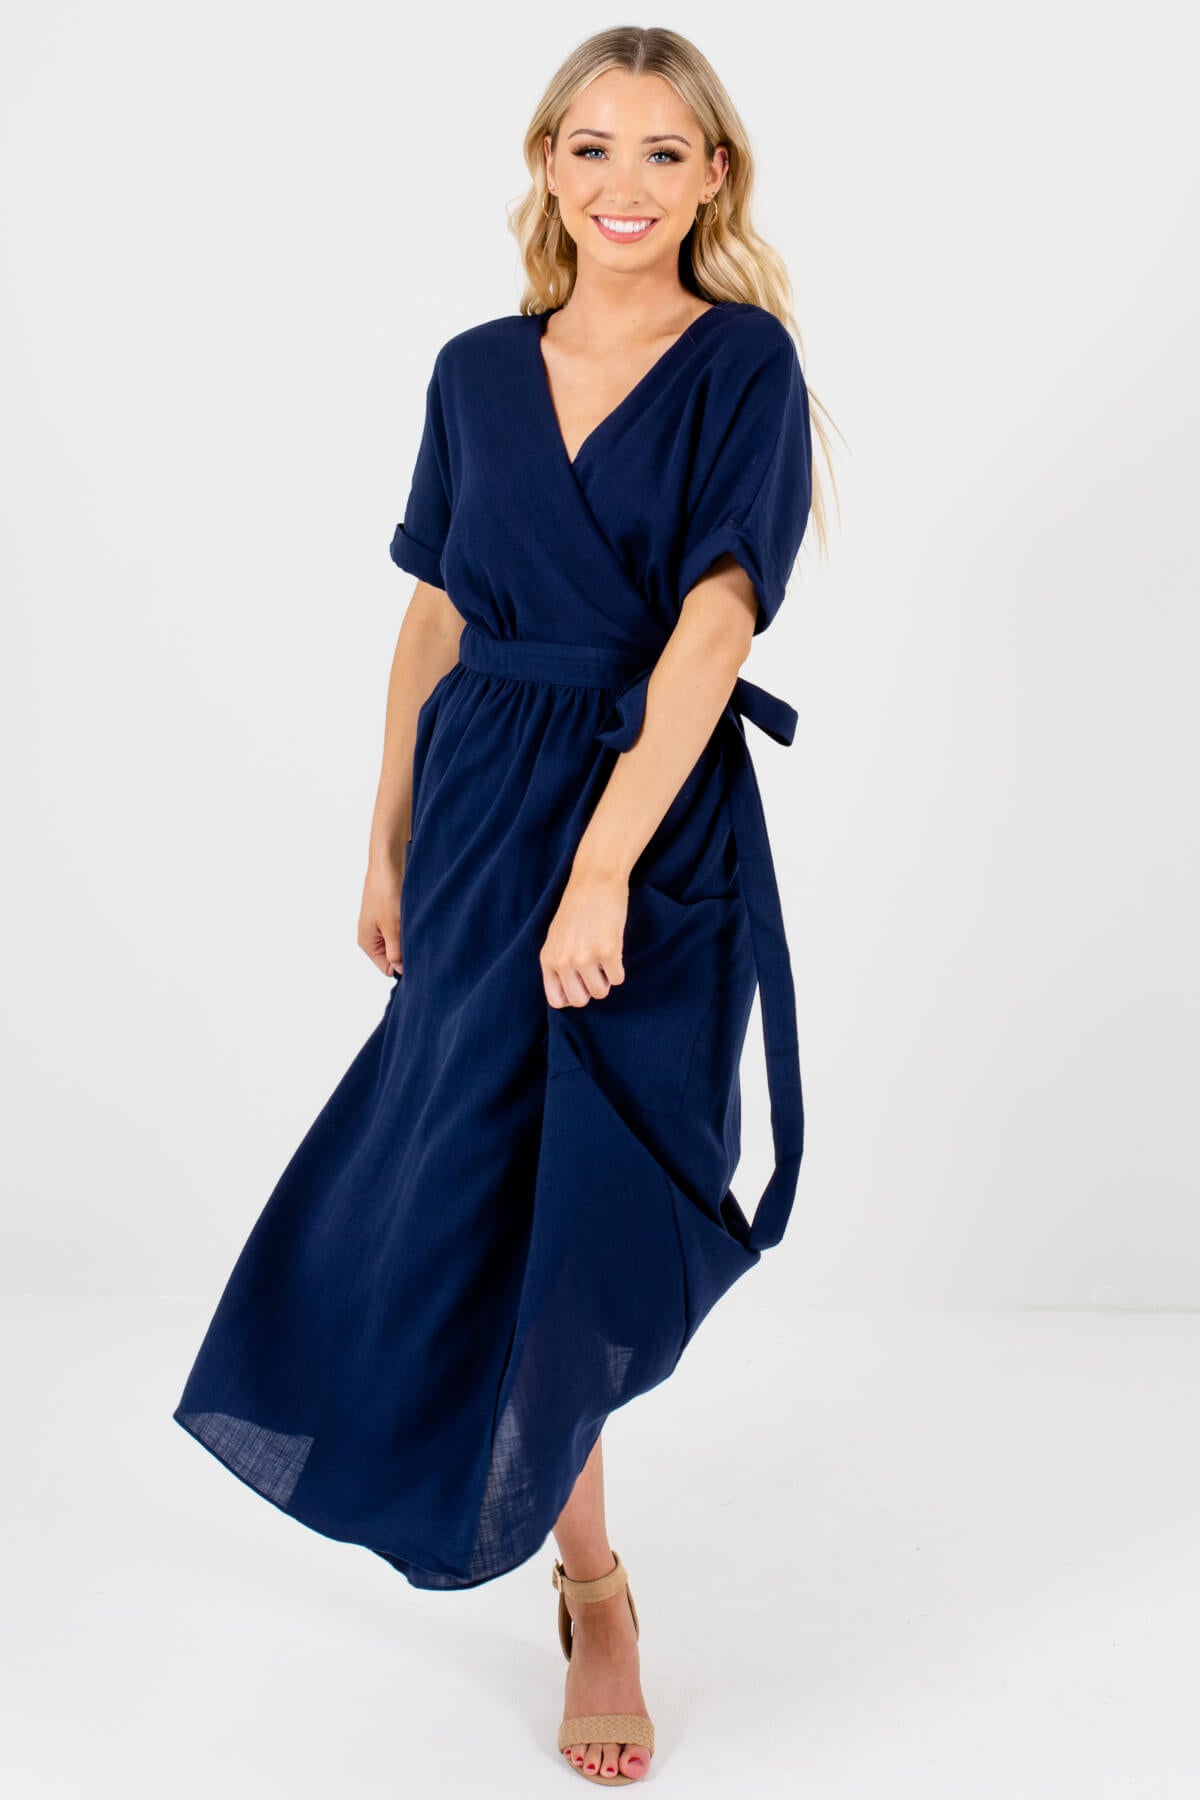 Dark Navy Blue Modest Wrap Maxi Dresses with Pockets